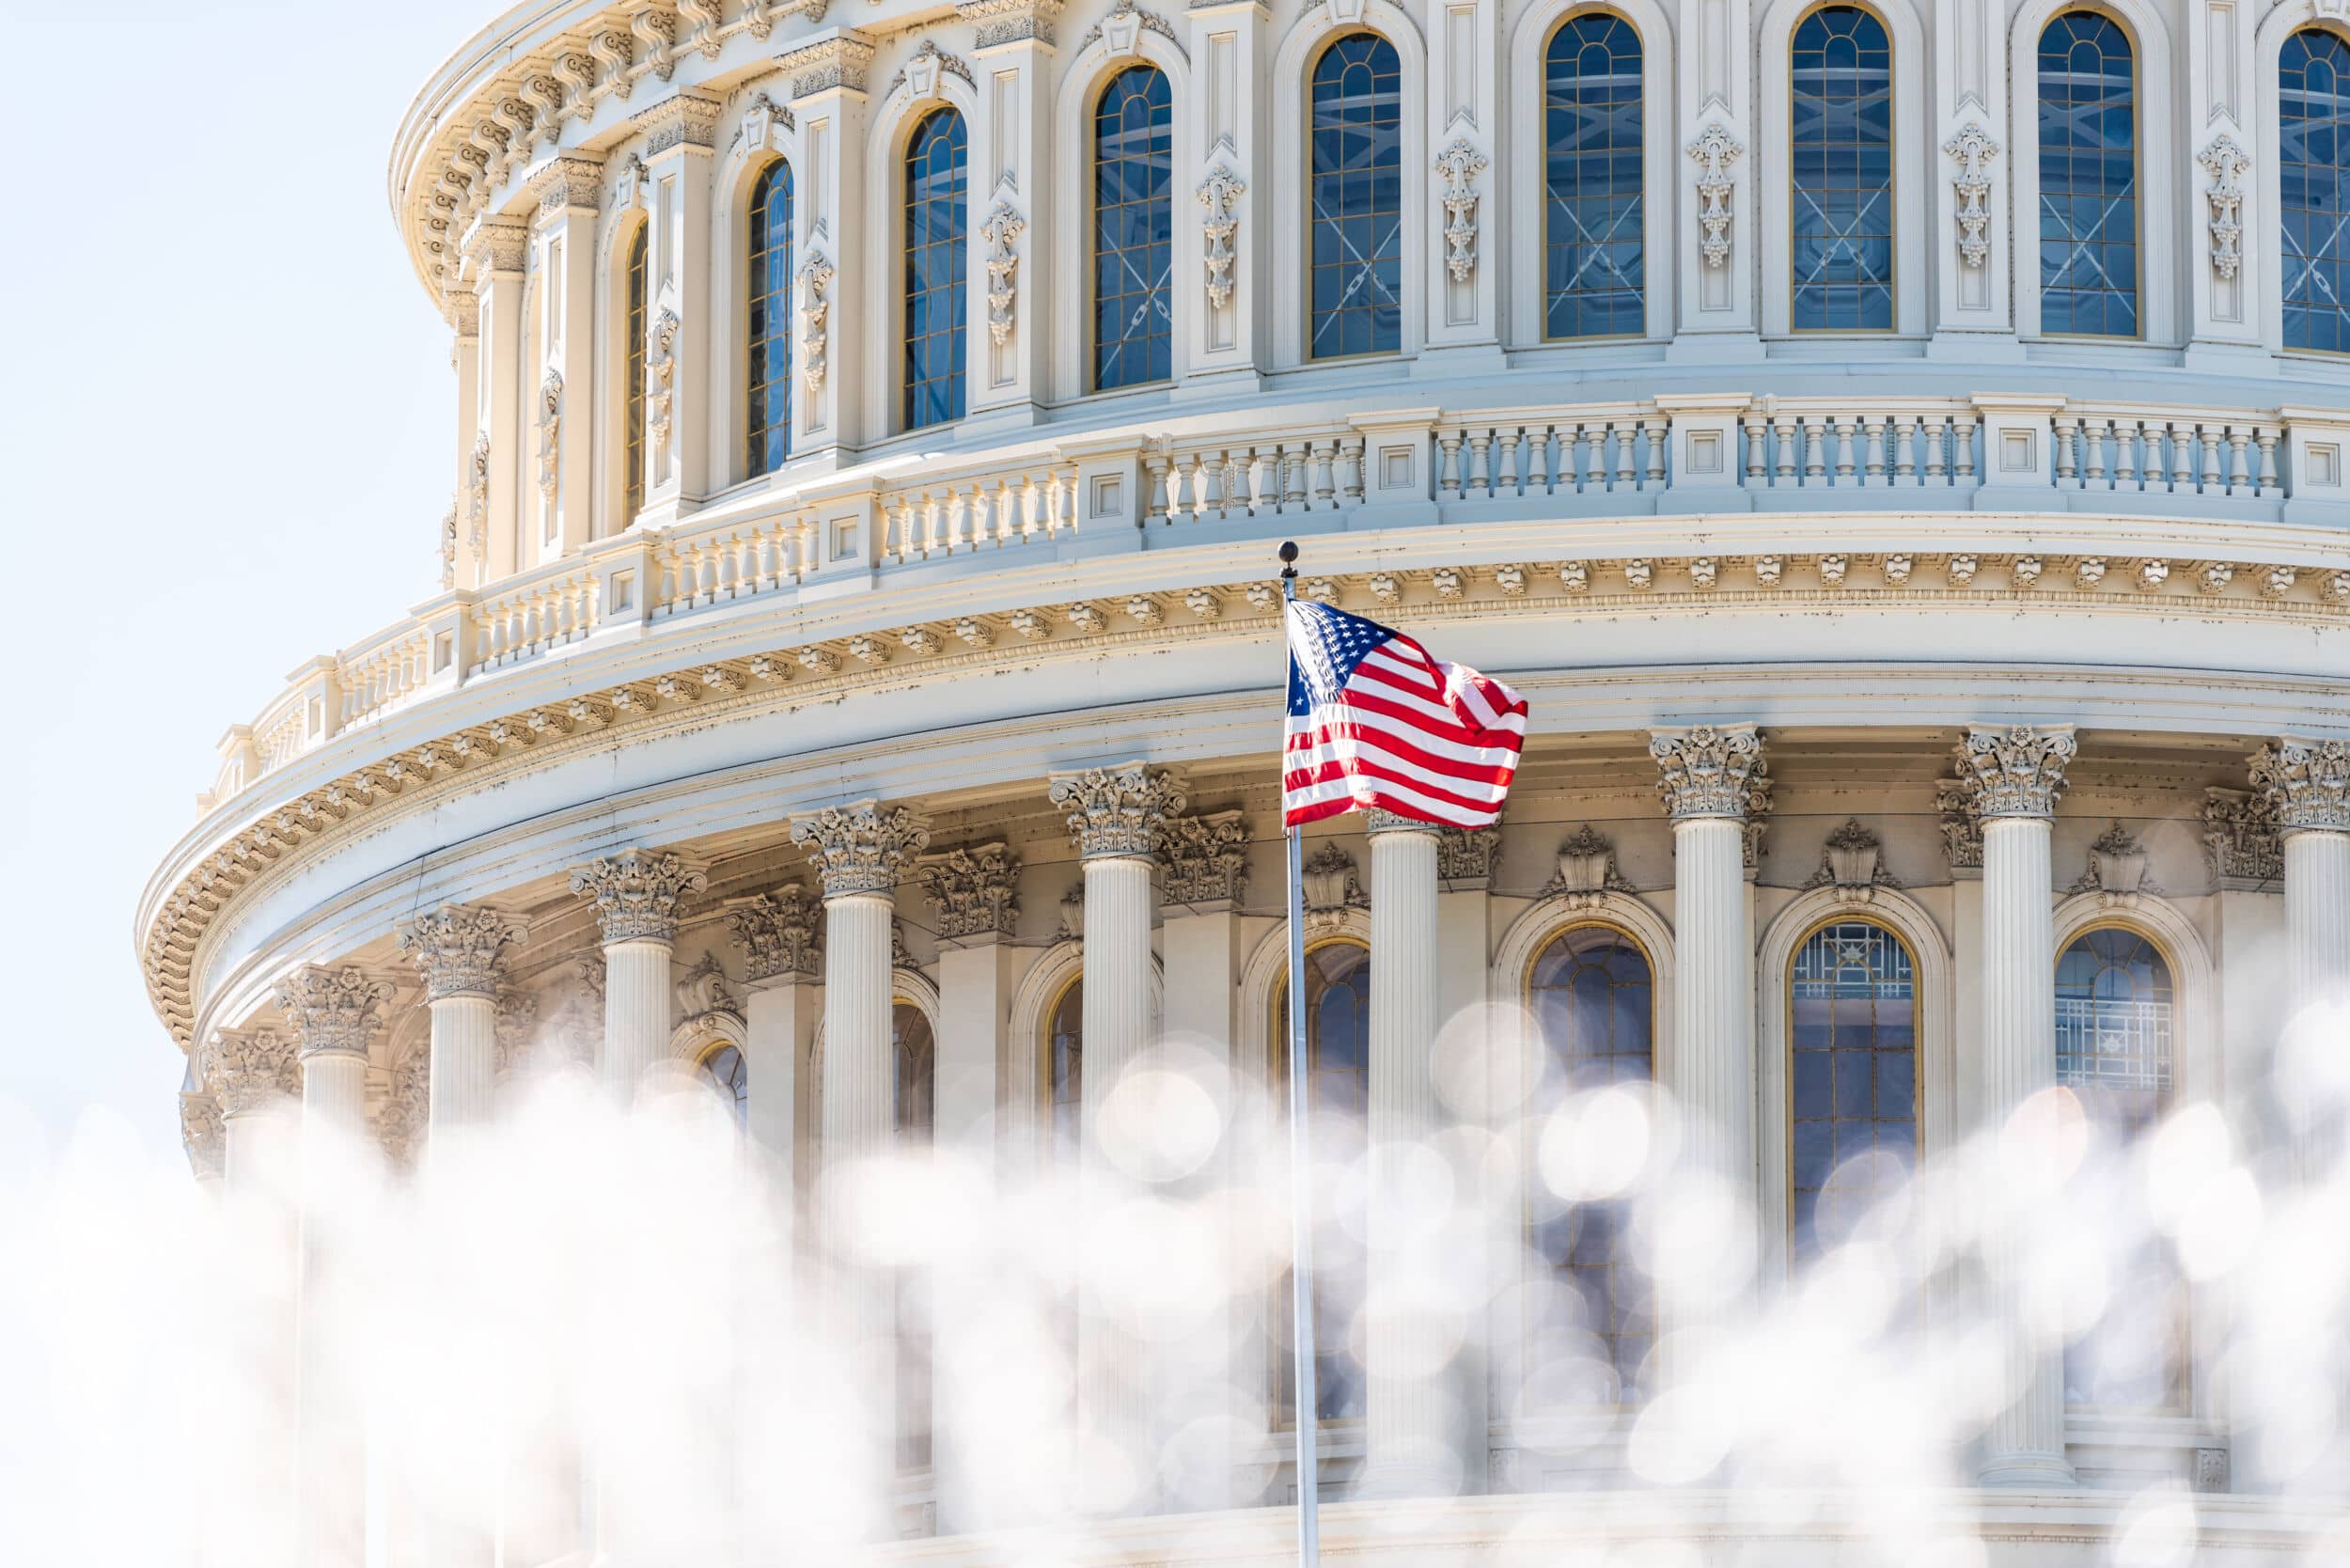 Us Congress Dome Closeup With Background Of Water Fountain Splashing, American Flag Waving In Washington Dc, Usa Closeup On Capital Capitol Hill, Columns, Pillars, Nobody